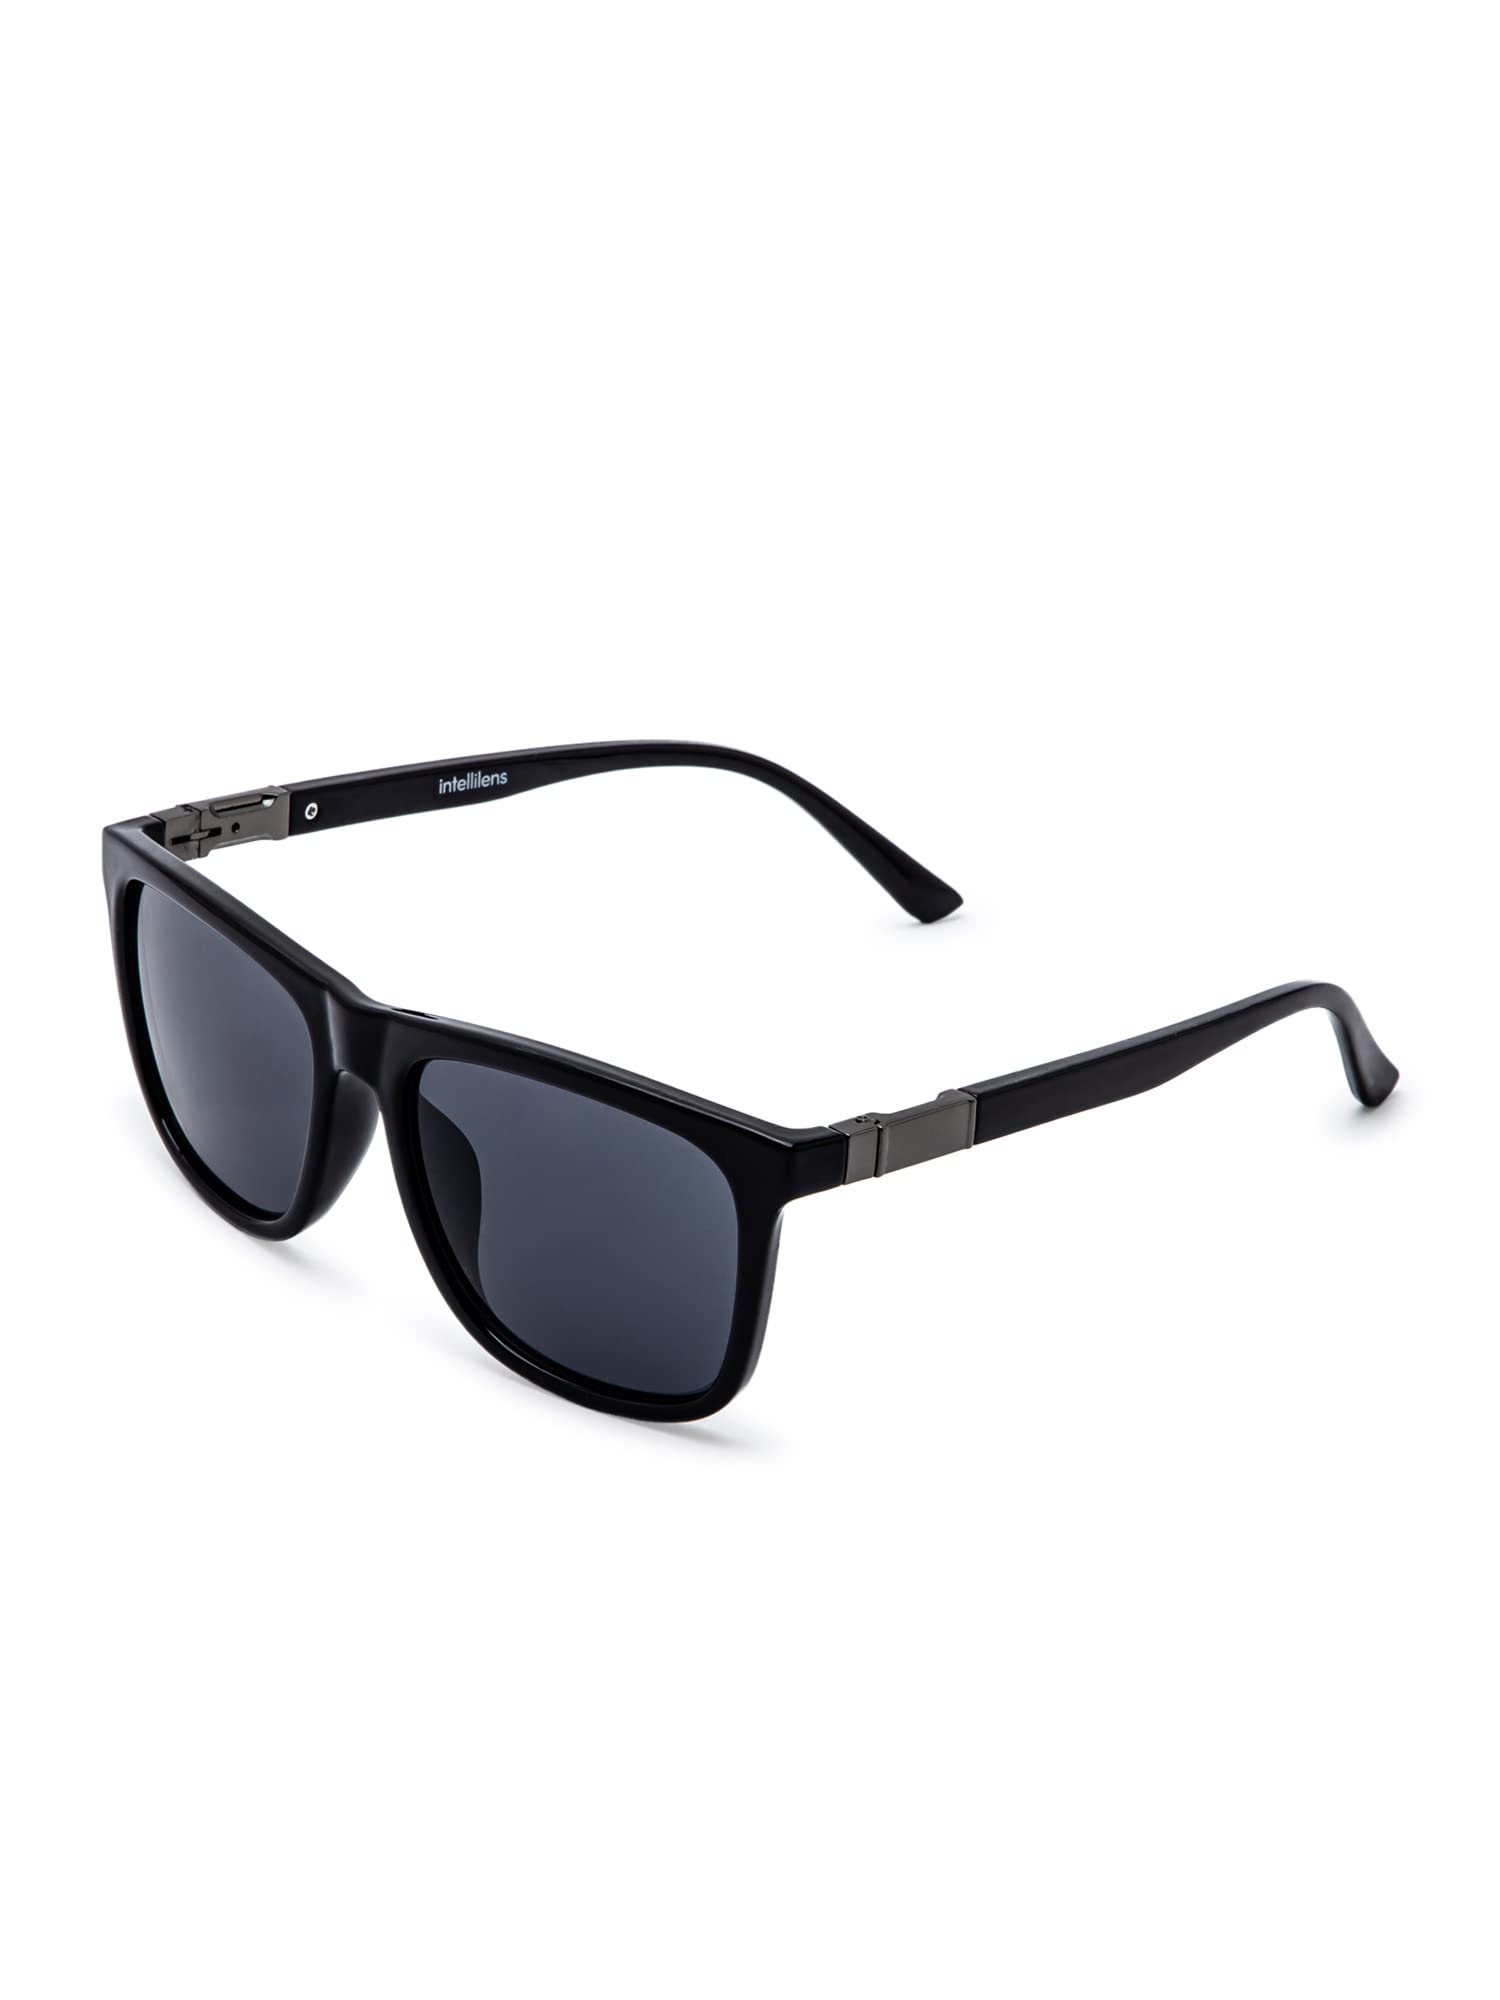 Hd Vision Sunglasses Optical Quality Lenses Unisex- Black